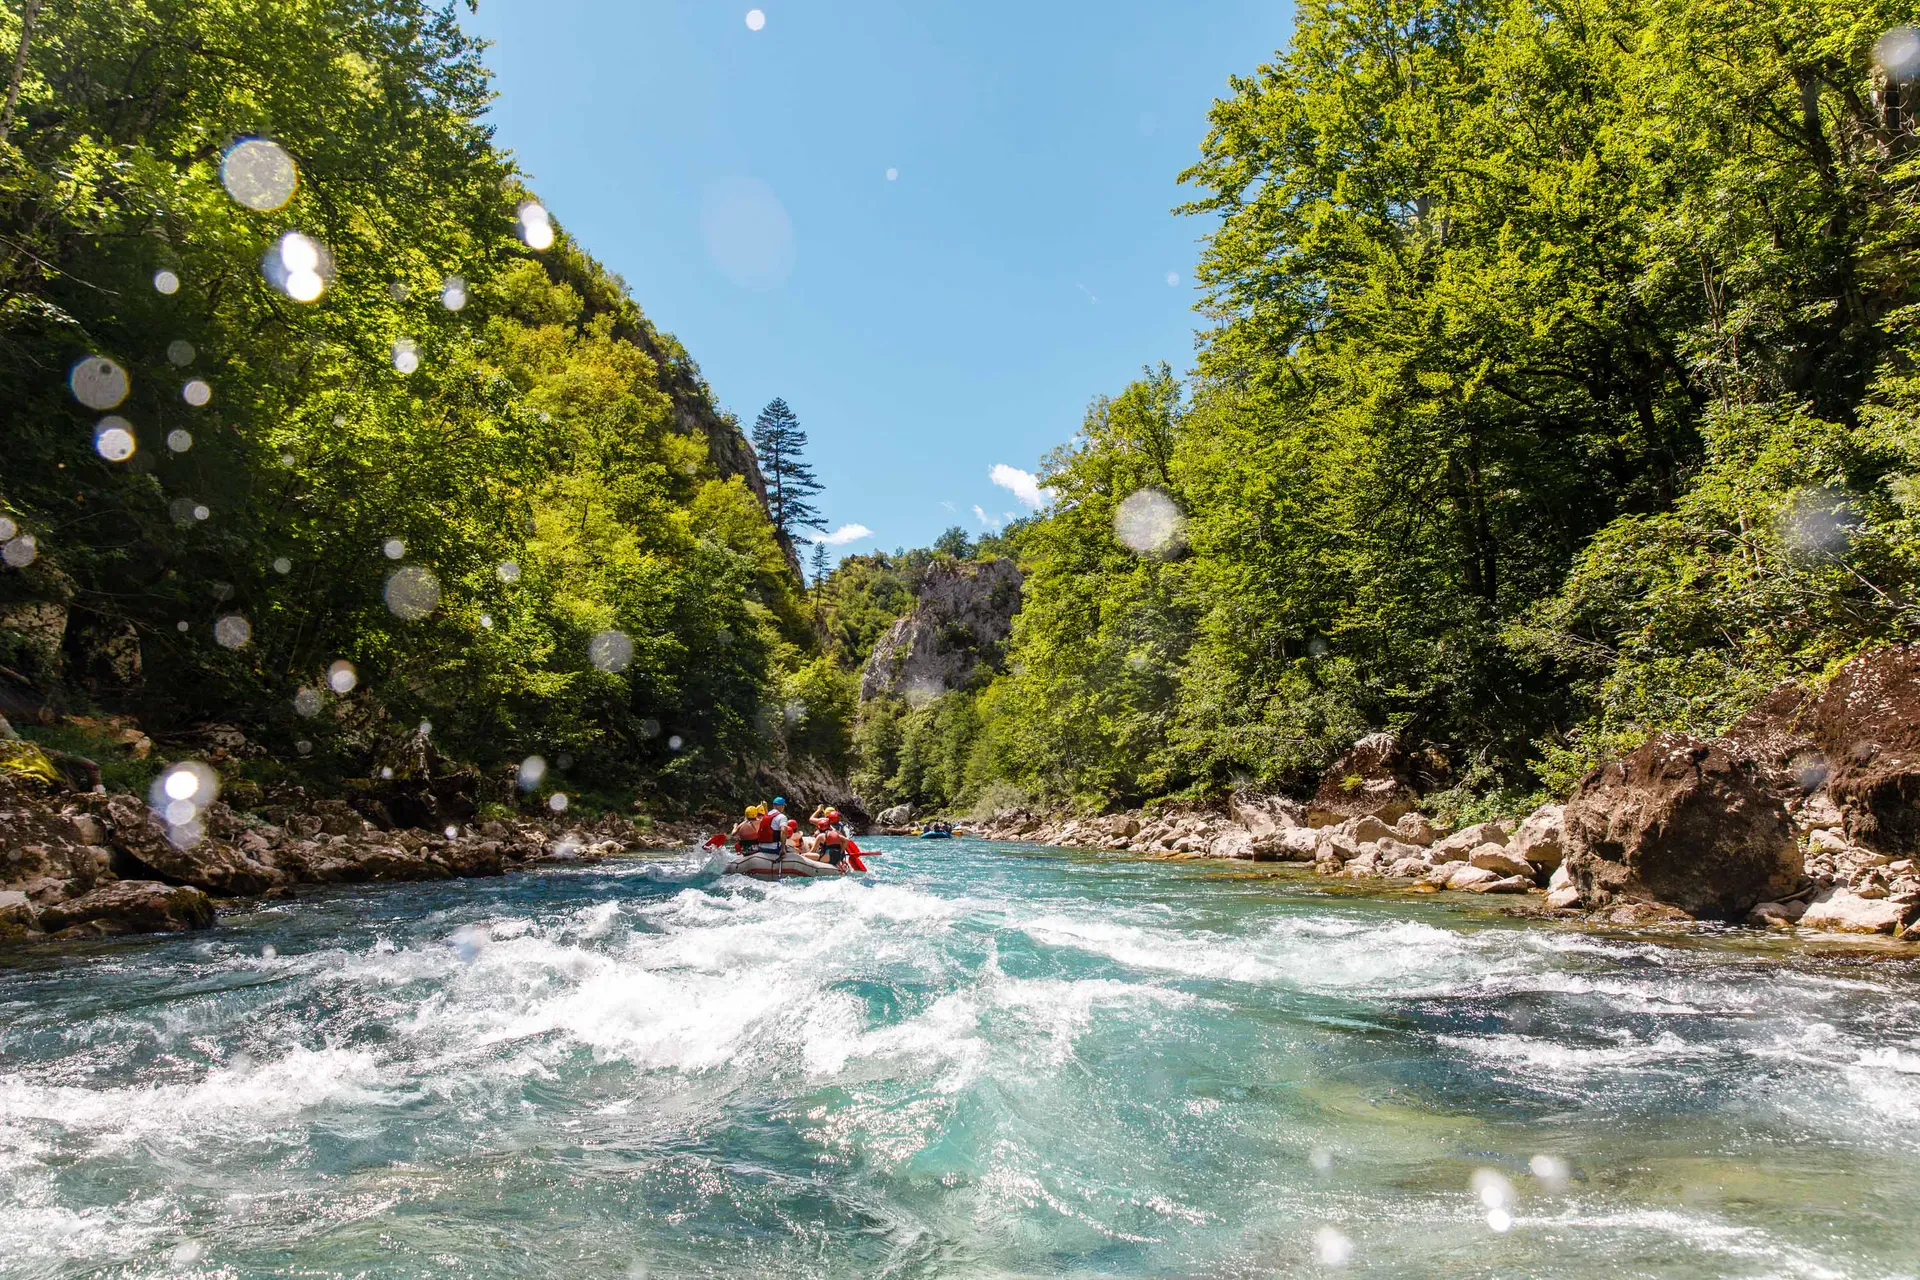 White water rafting down the Tara River in Montenegro